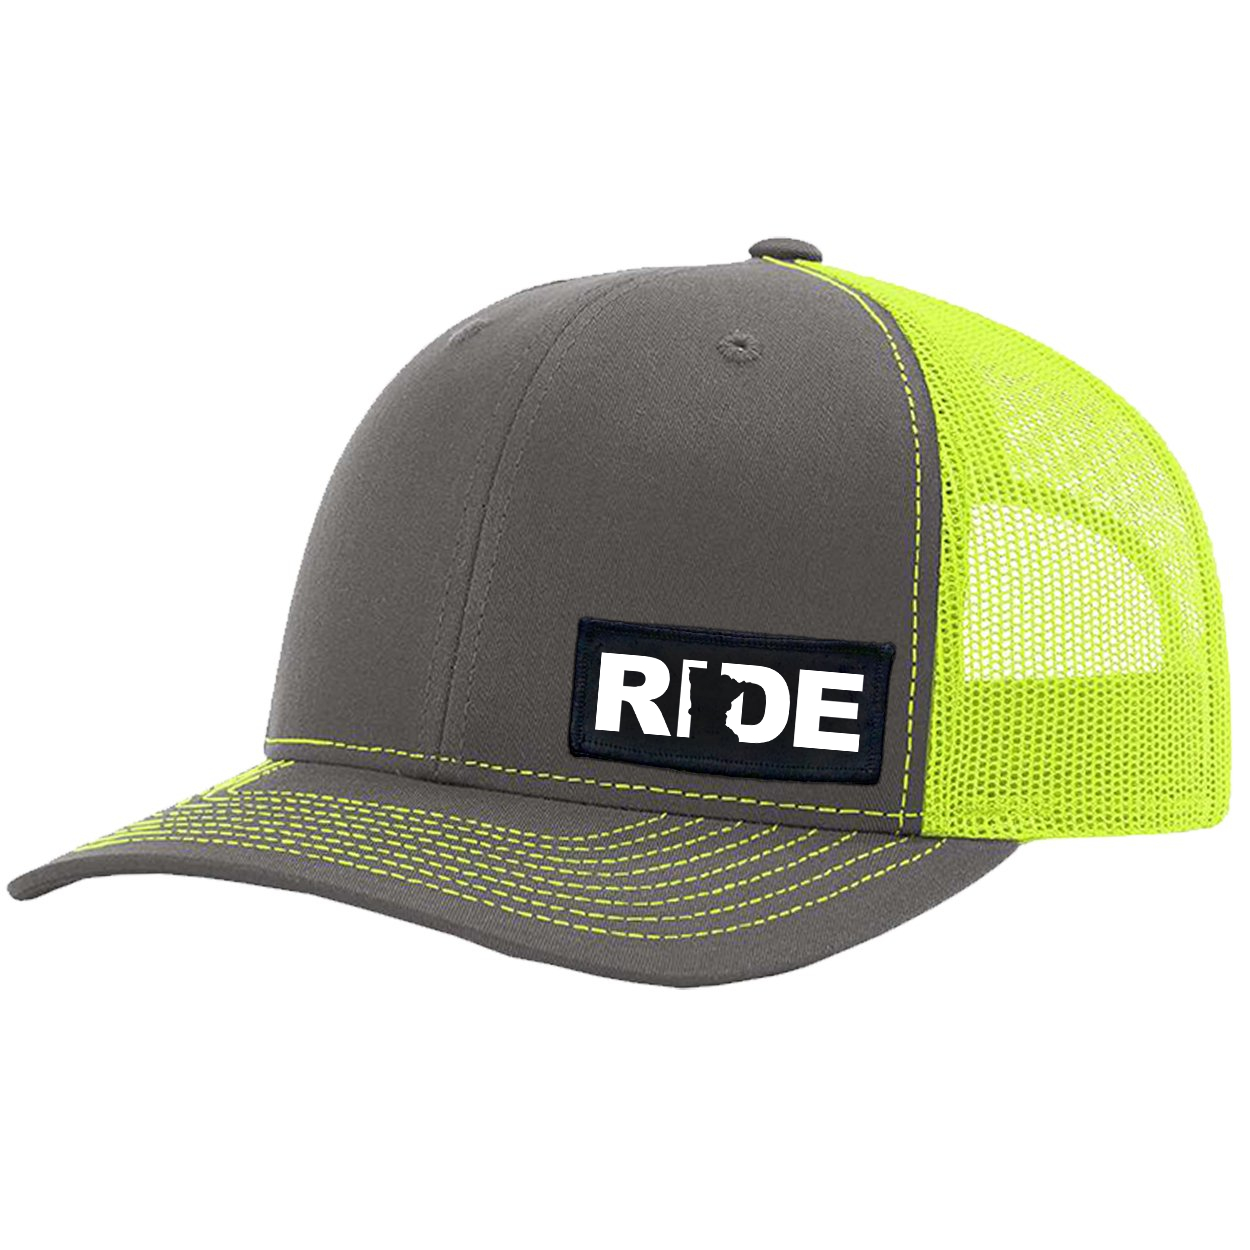 Ride Minnesota Night Out Woven Patch Snapback Trucker Hat Gray/Neon Yellow (White Logo)